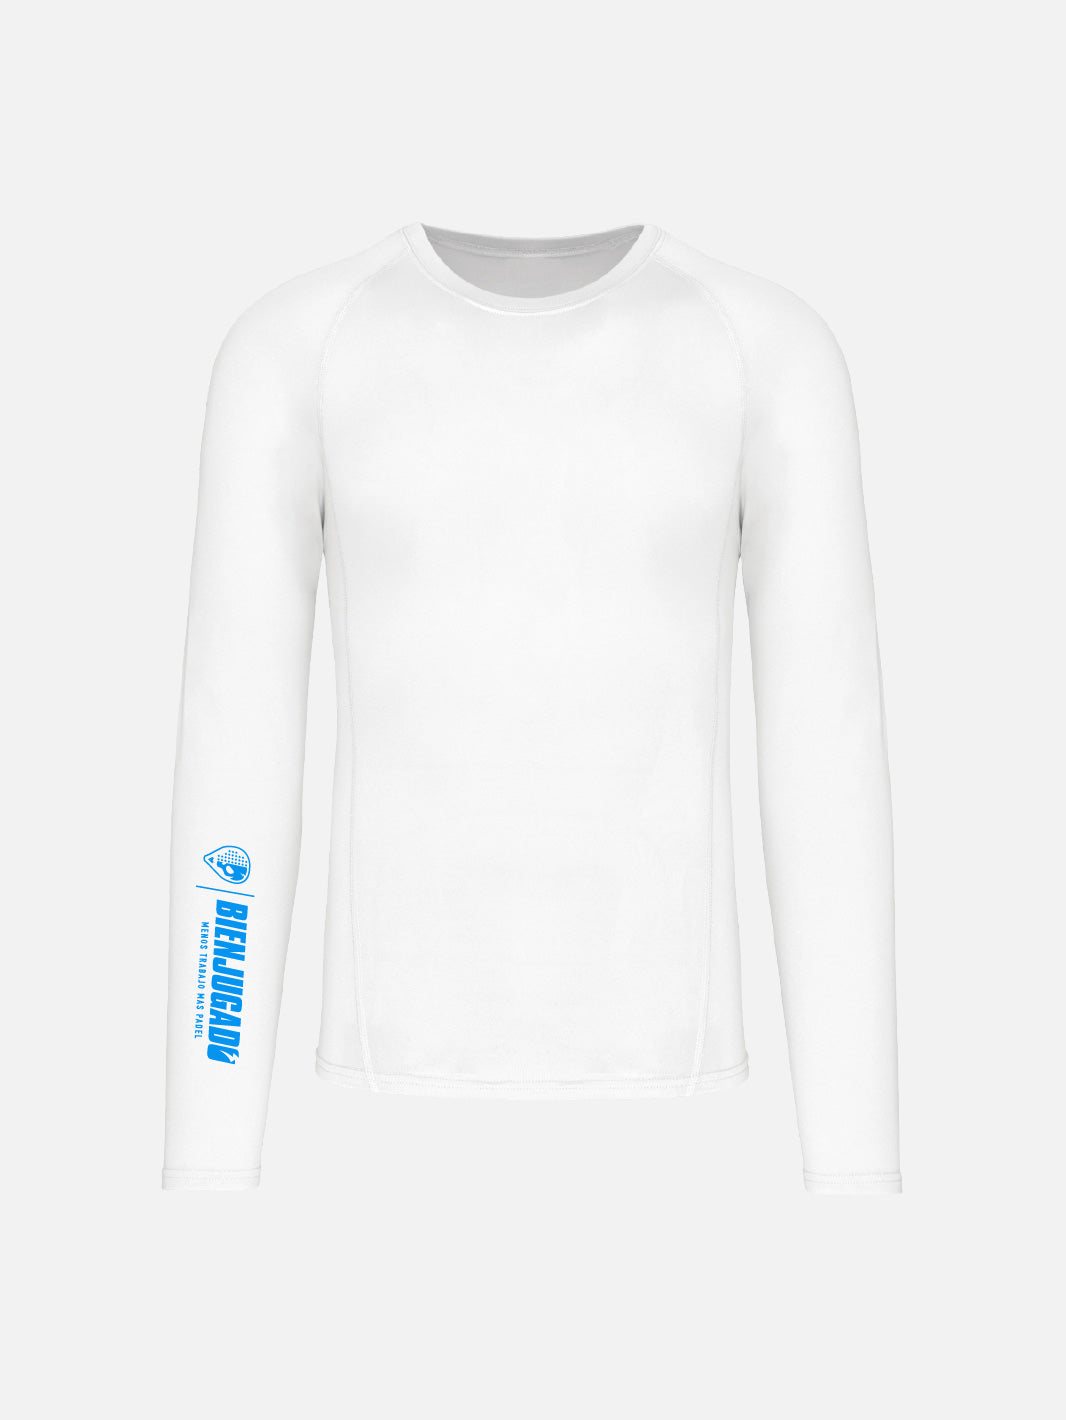 Unisex Thermal Shirt - White